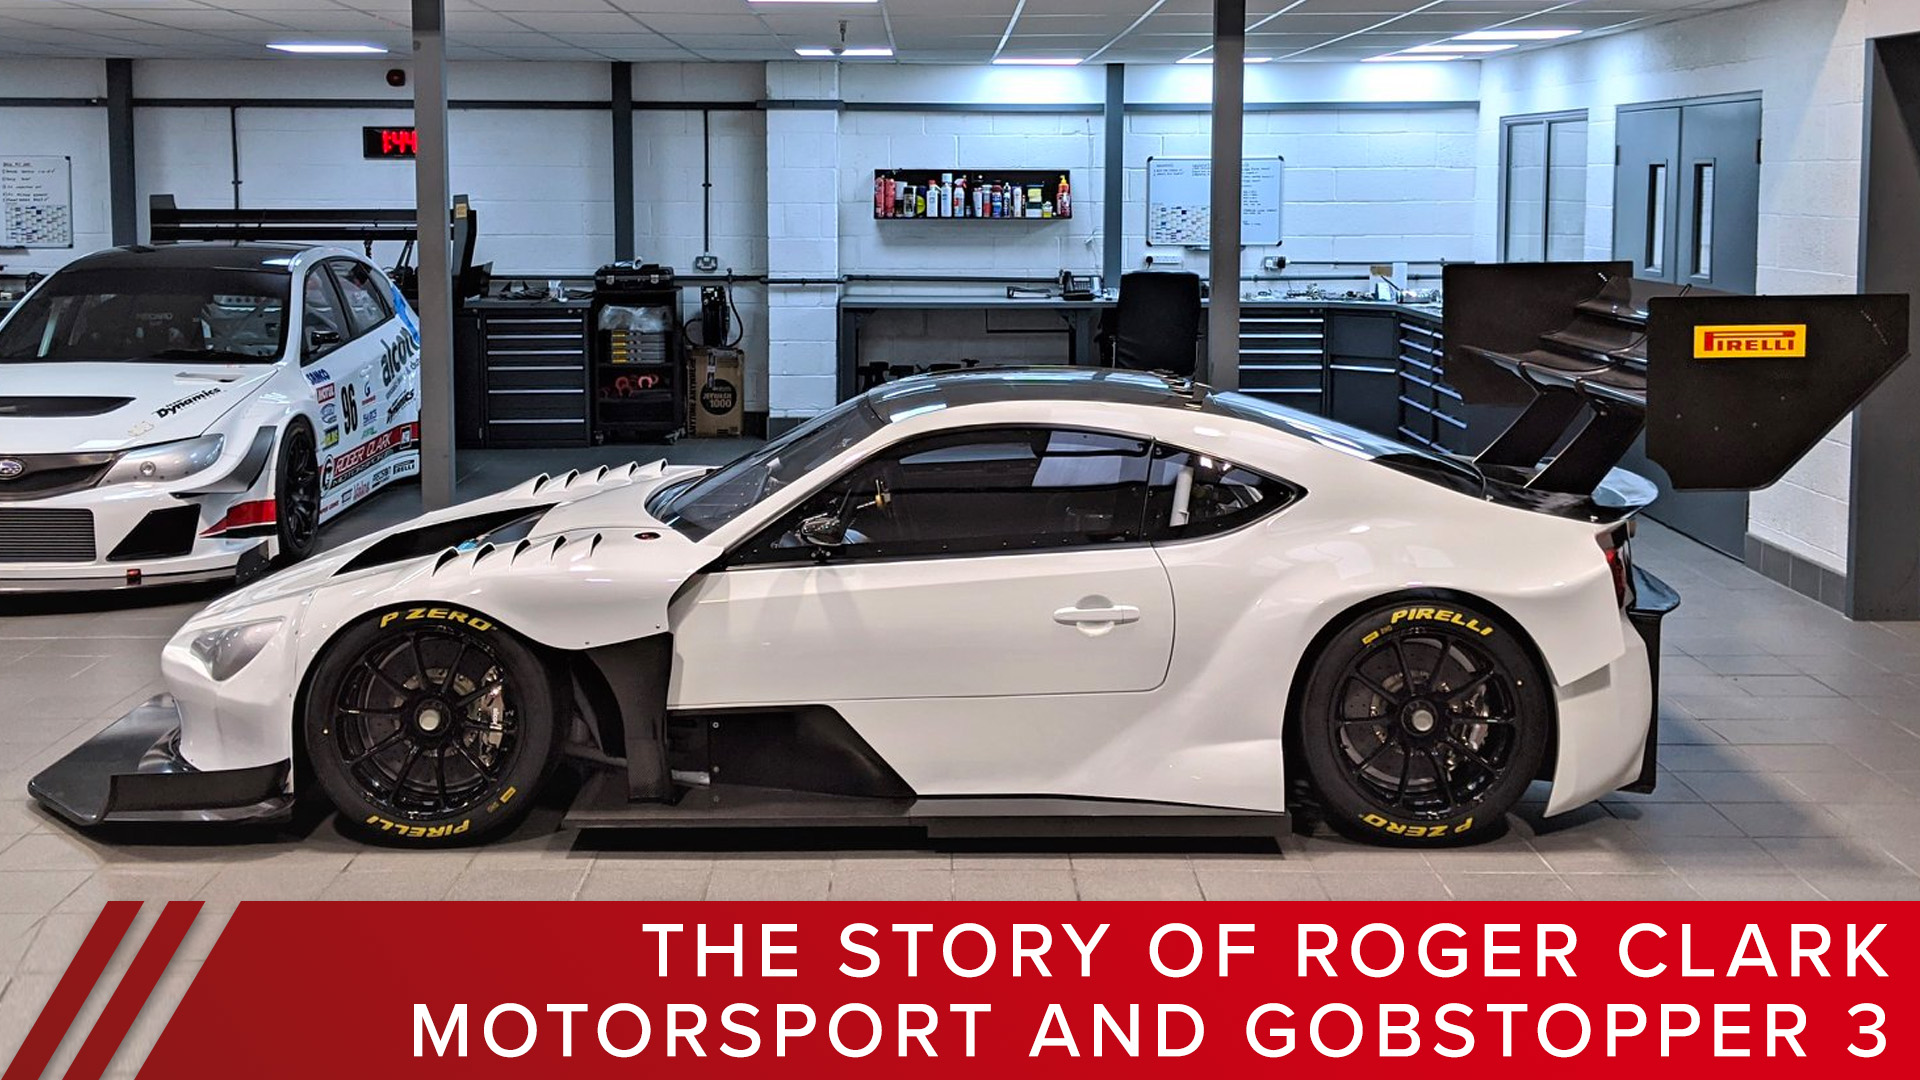 The Story of Roger Clark Motorsport and Gobstopper 3